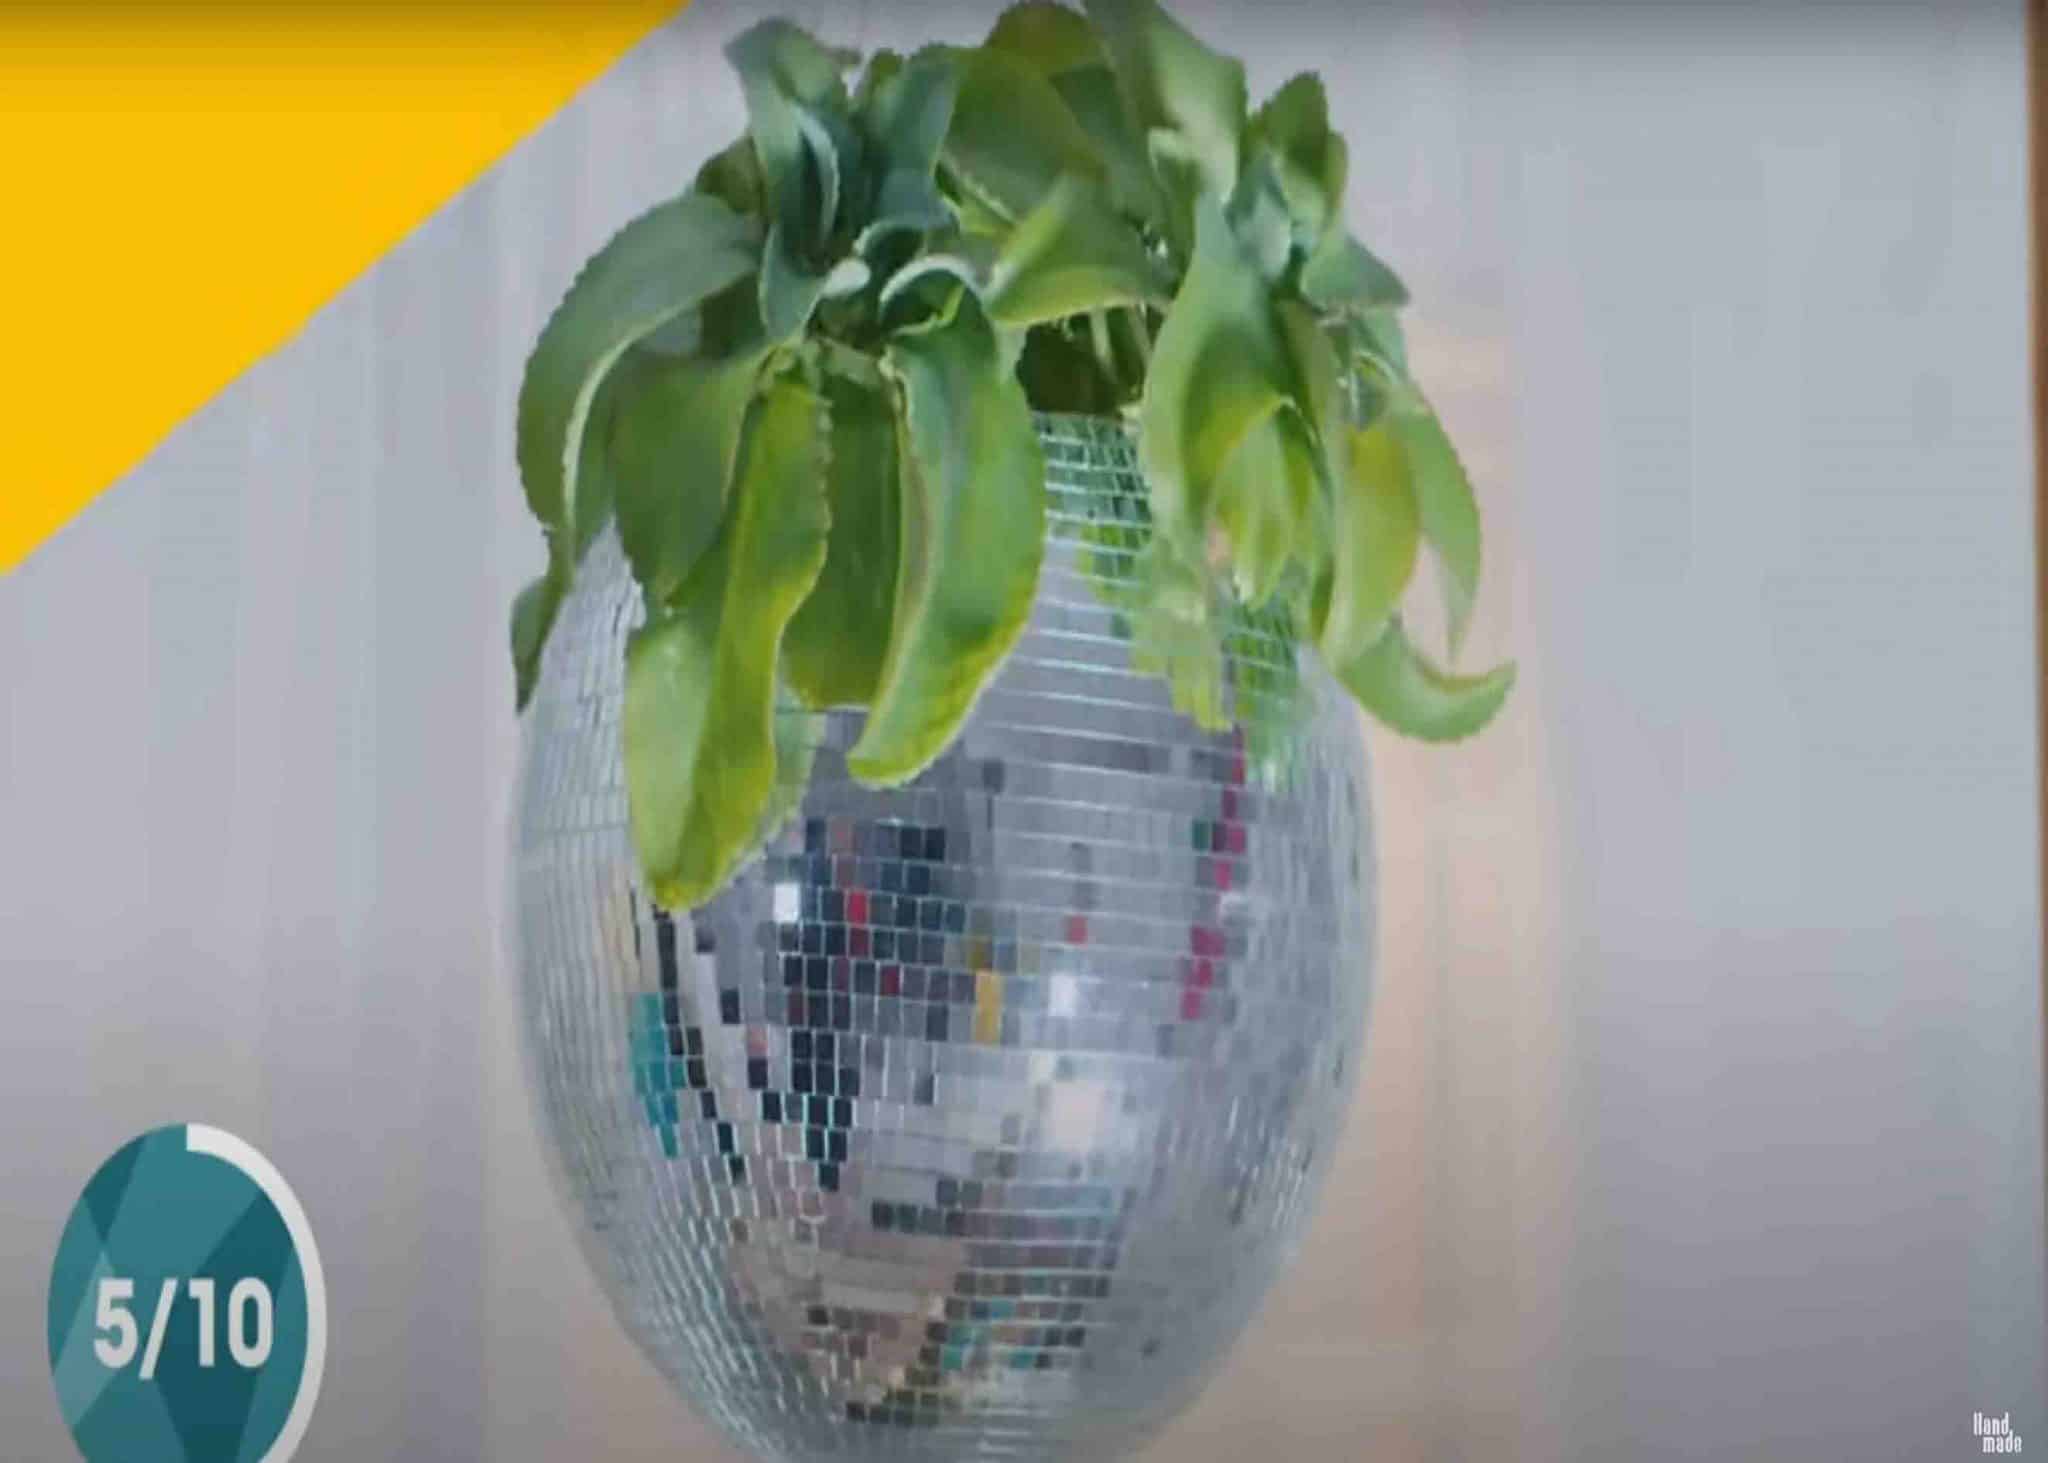 Repurposed disco ball as a planter